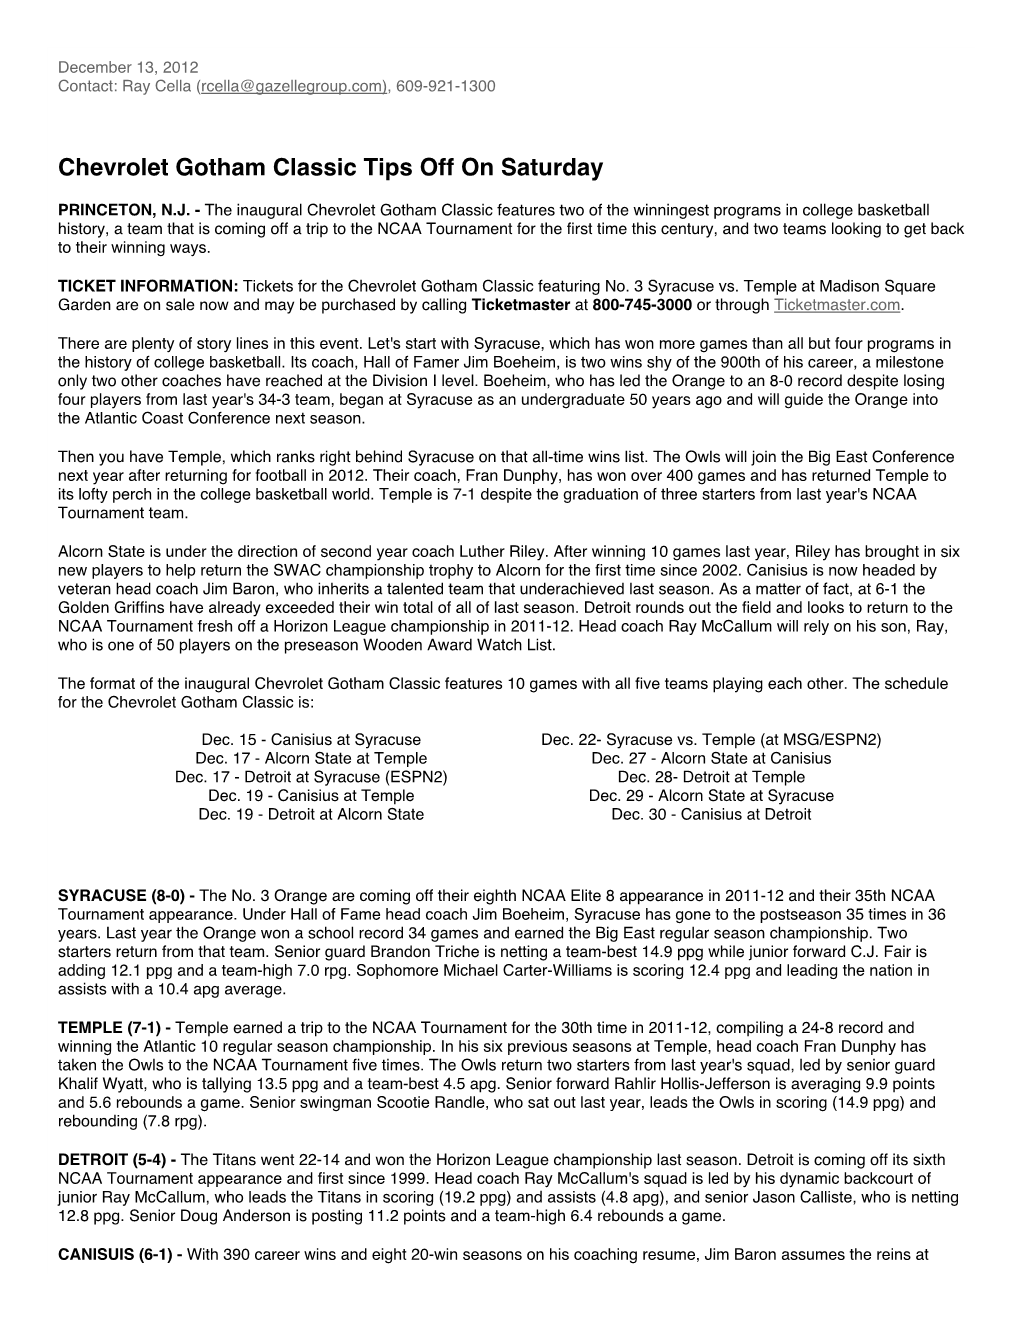 Chevrolet Gotham Classic Tips Off on Saturday